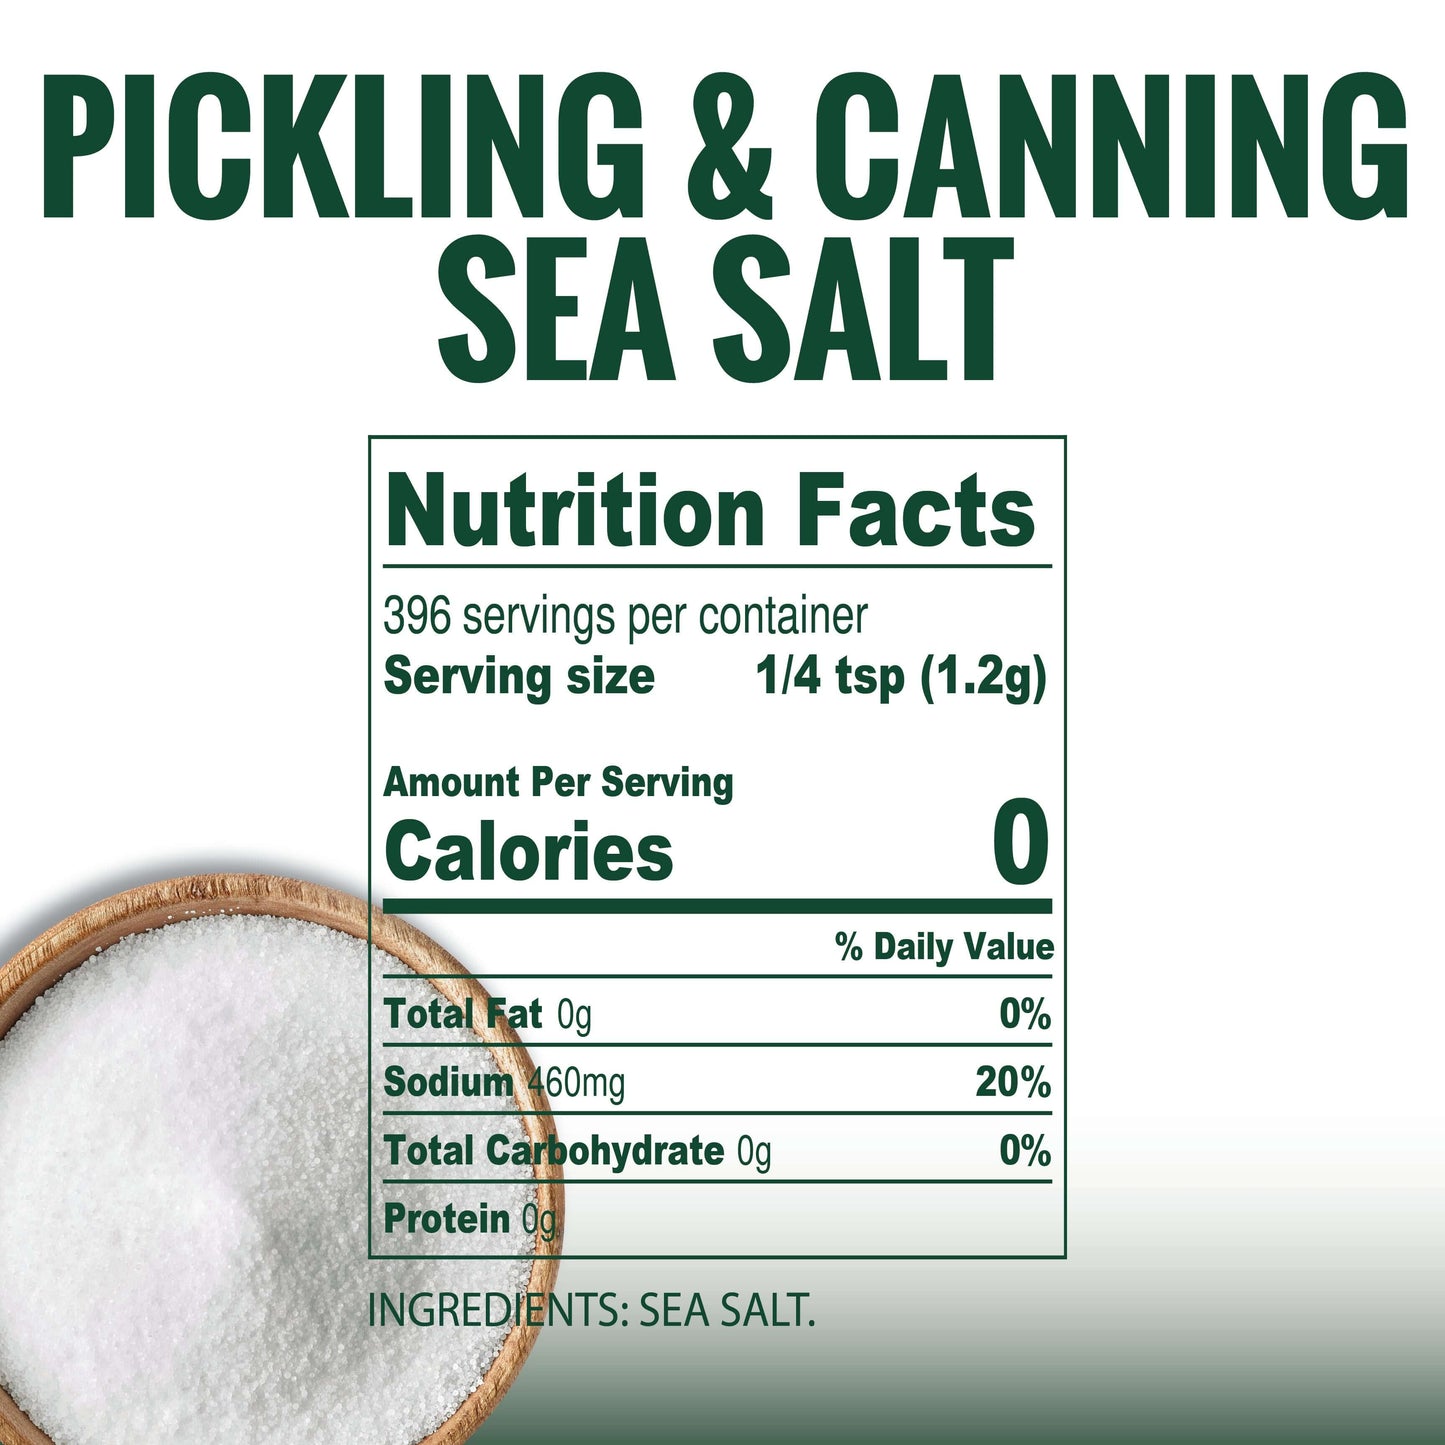 Pickling & Canning Sea Salt